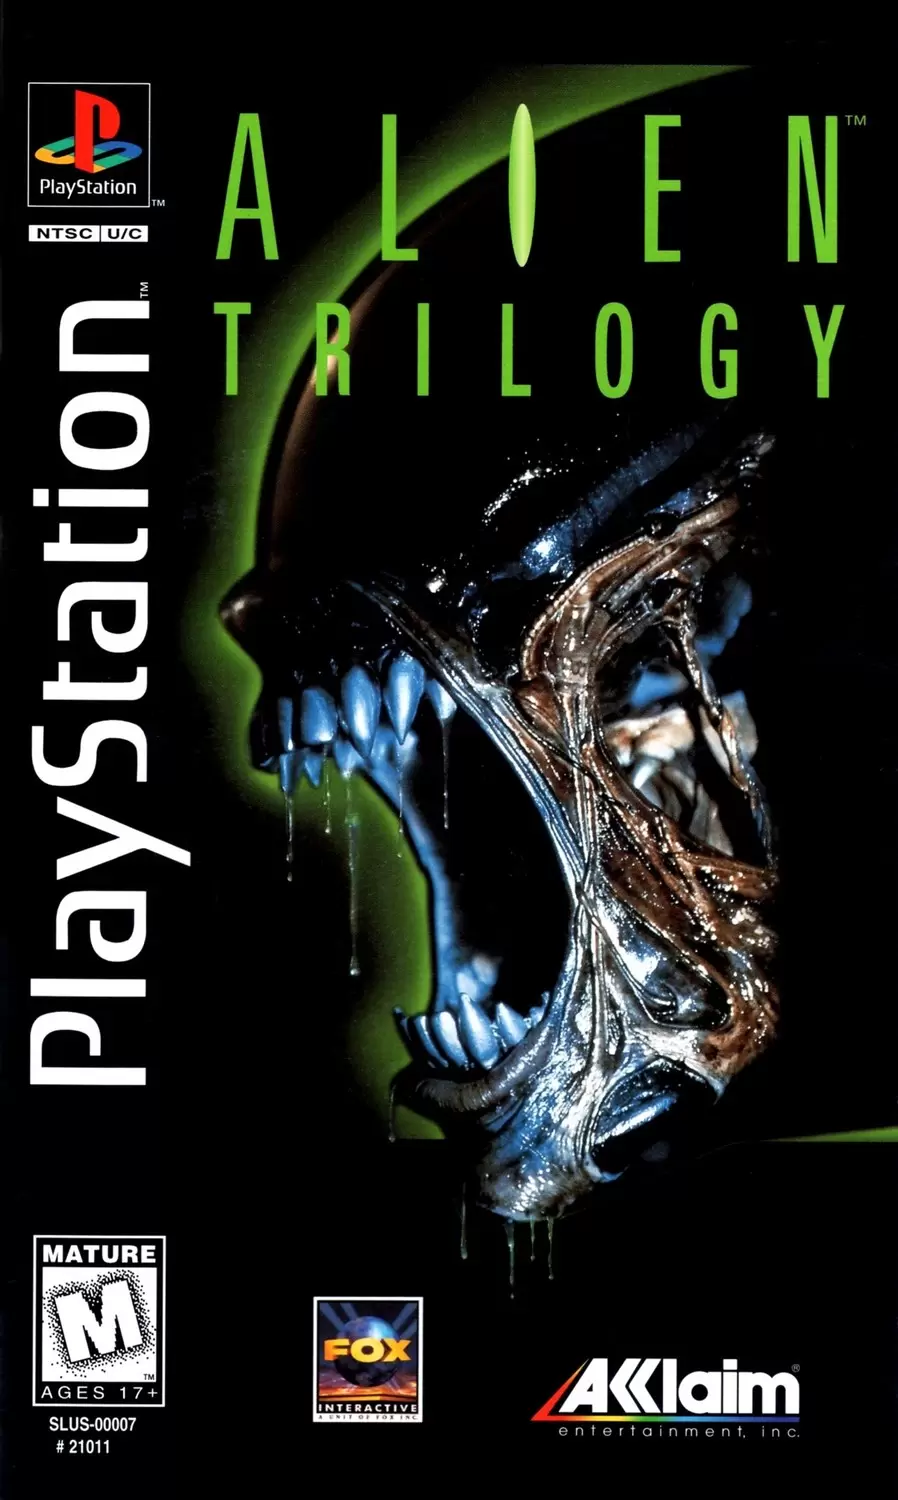 Playstation games - Alien Trilogy